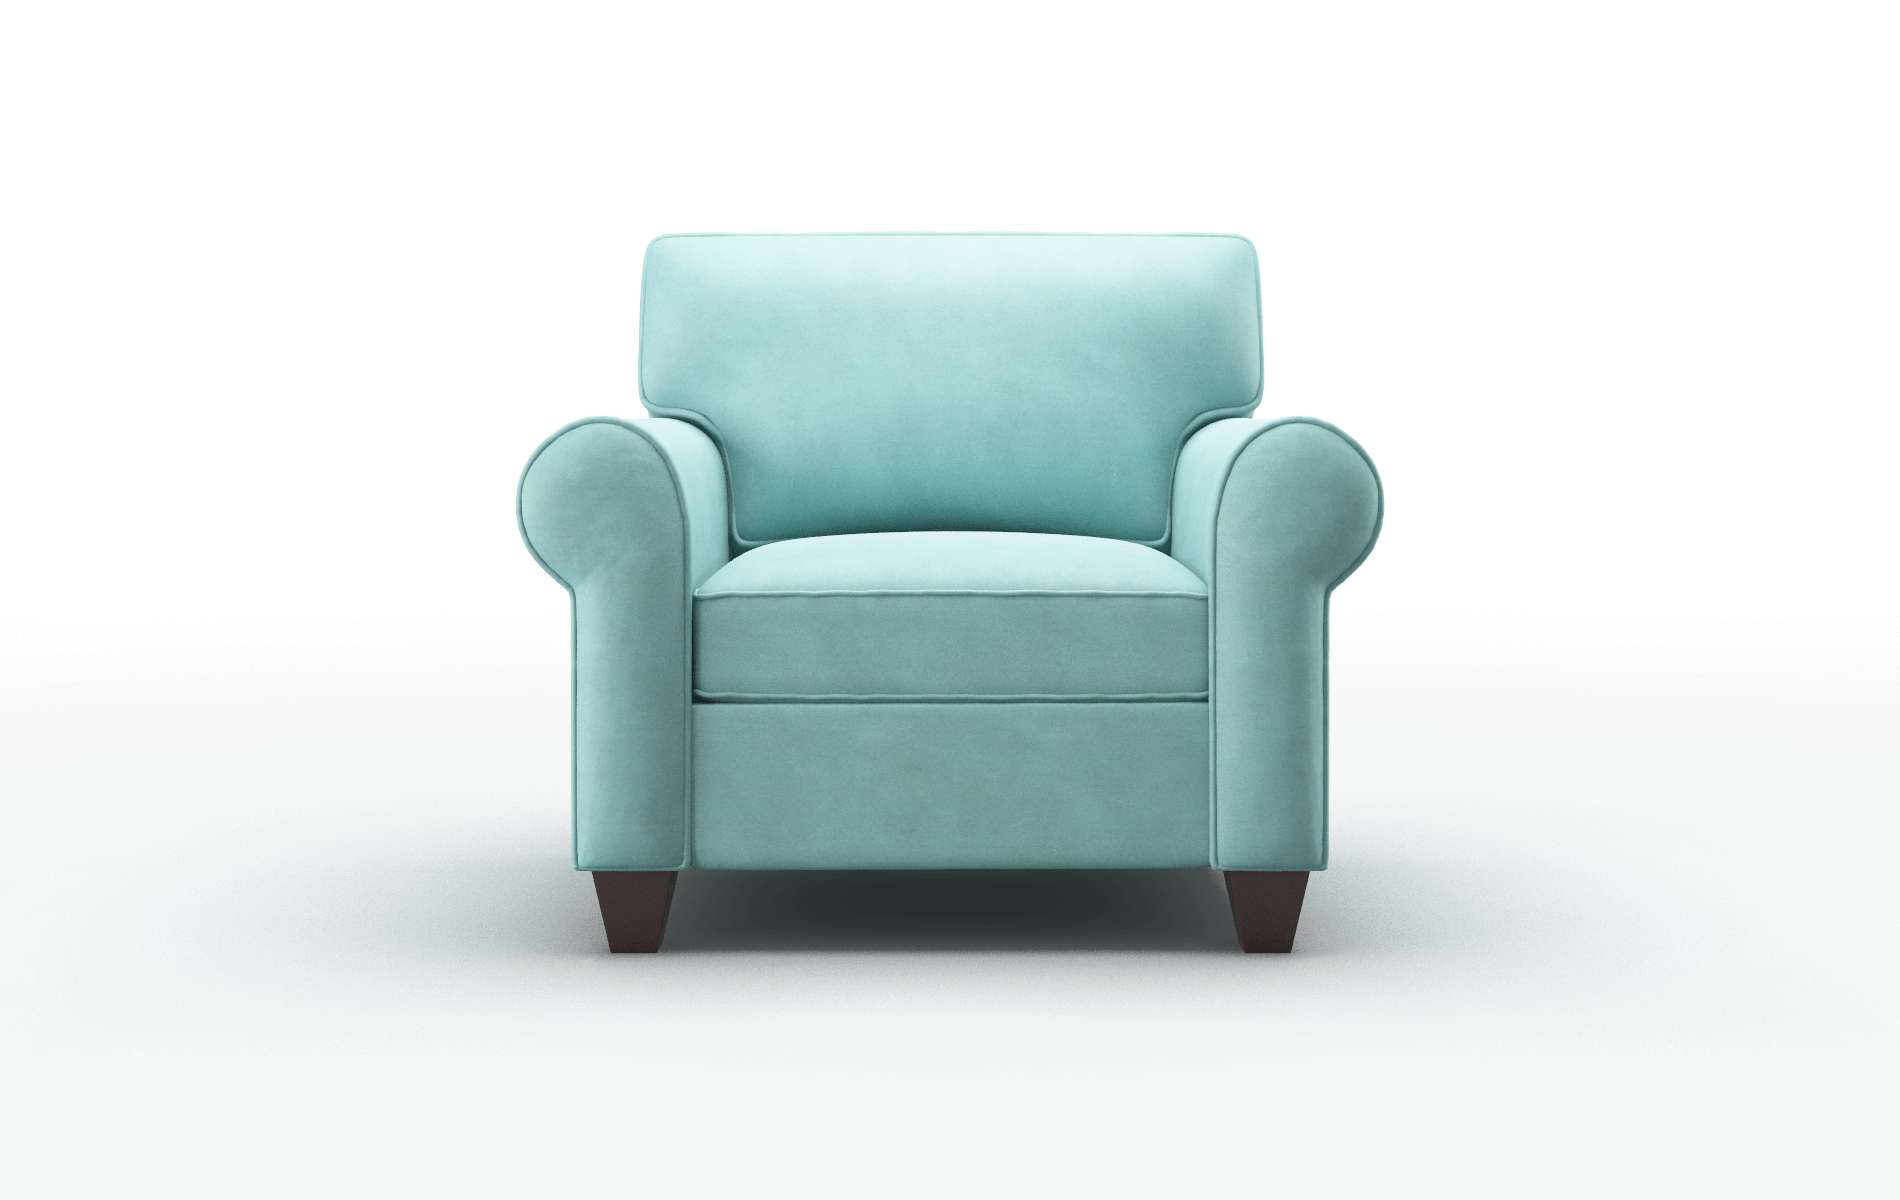 Augusta Dream_d French_blue chair espresso legs